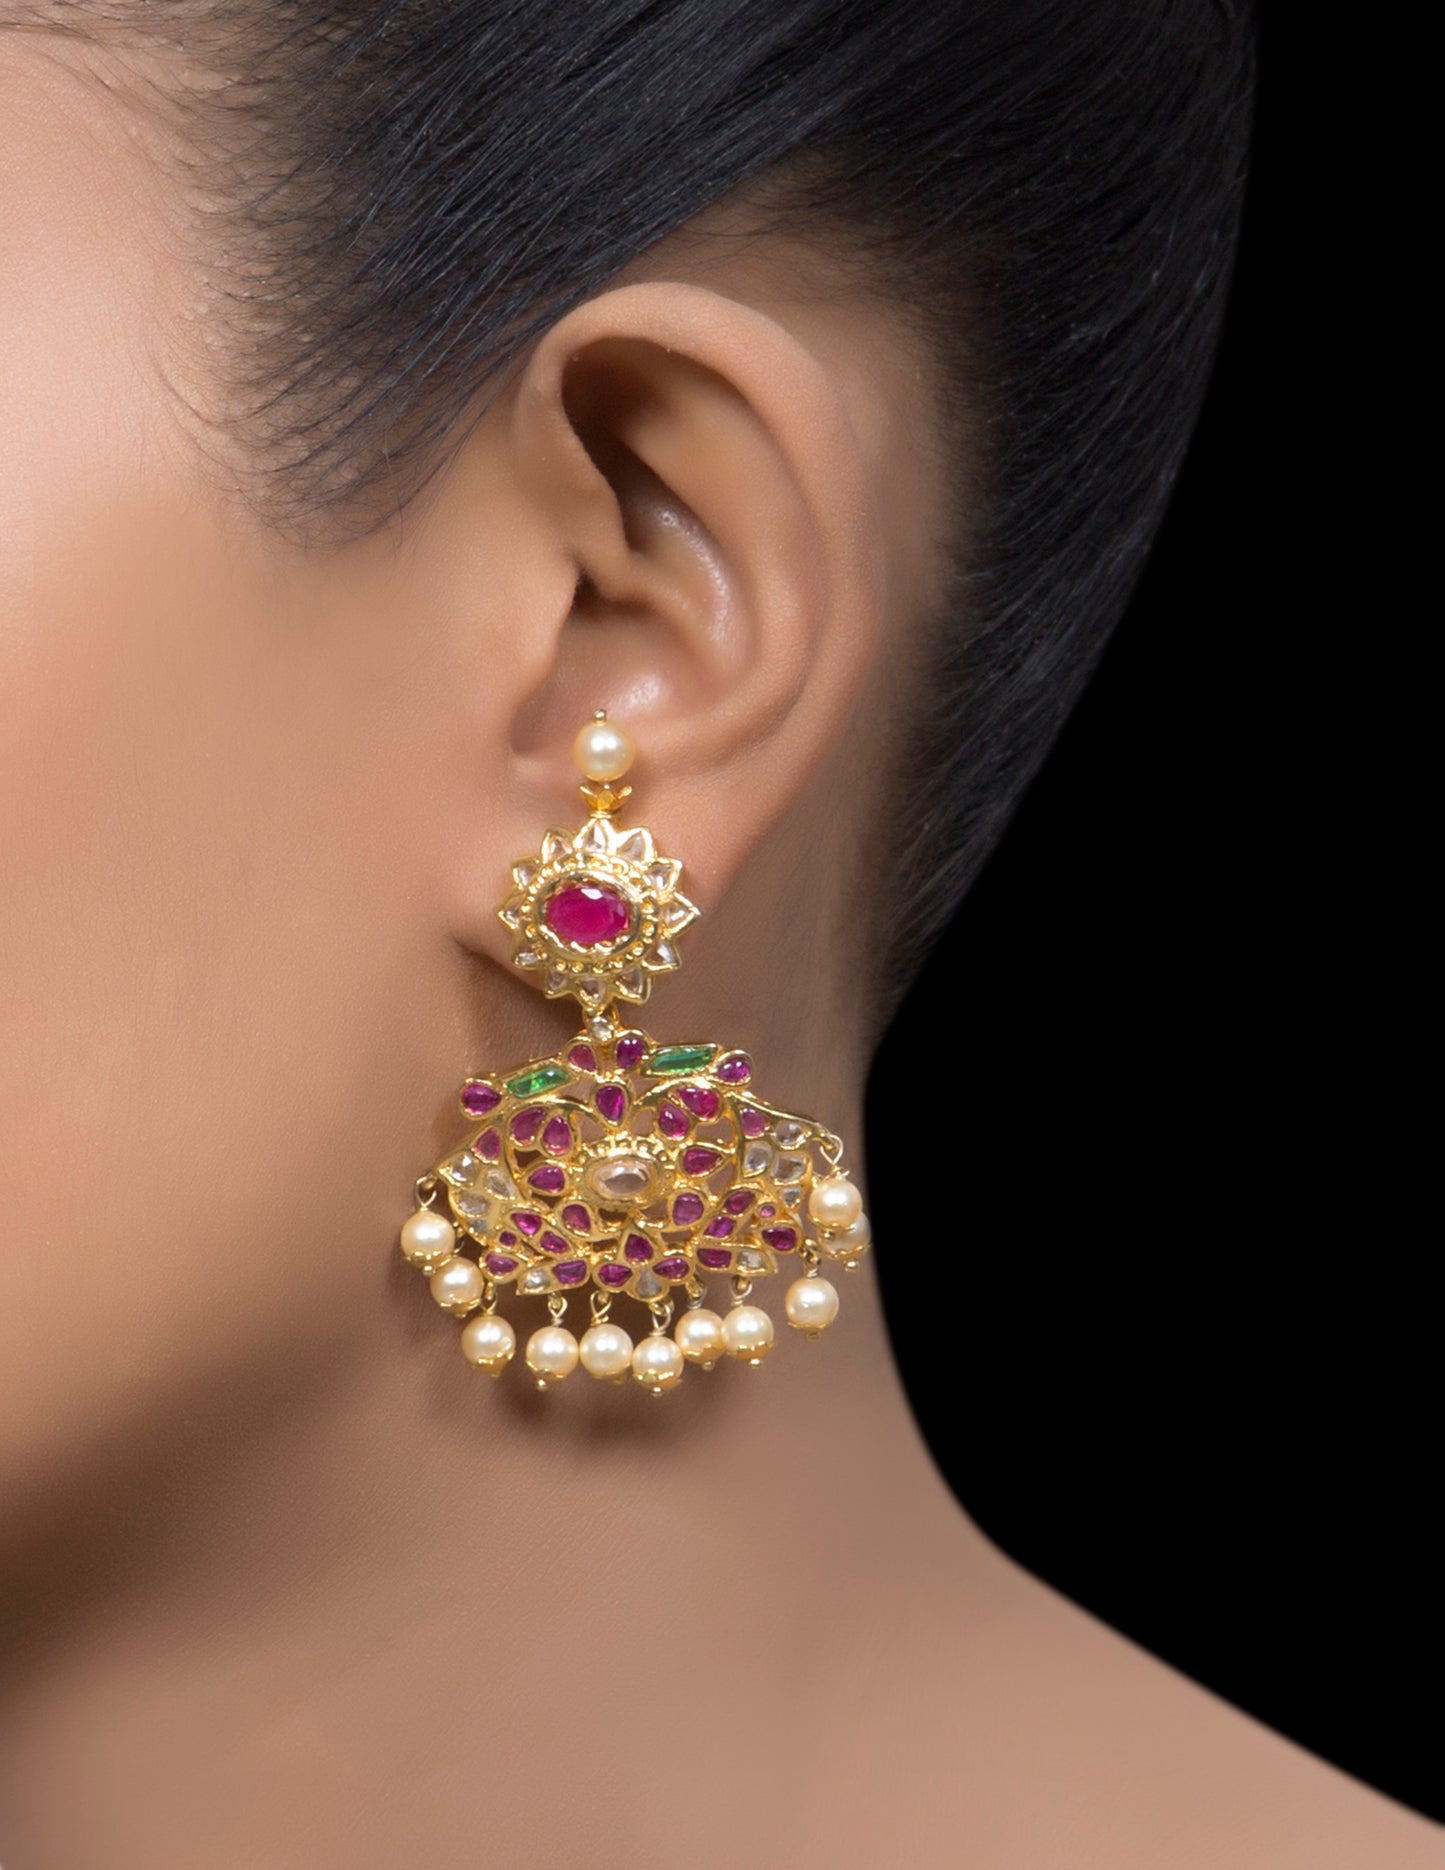 Ruby elliptical earrings with pearl drops